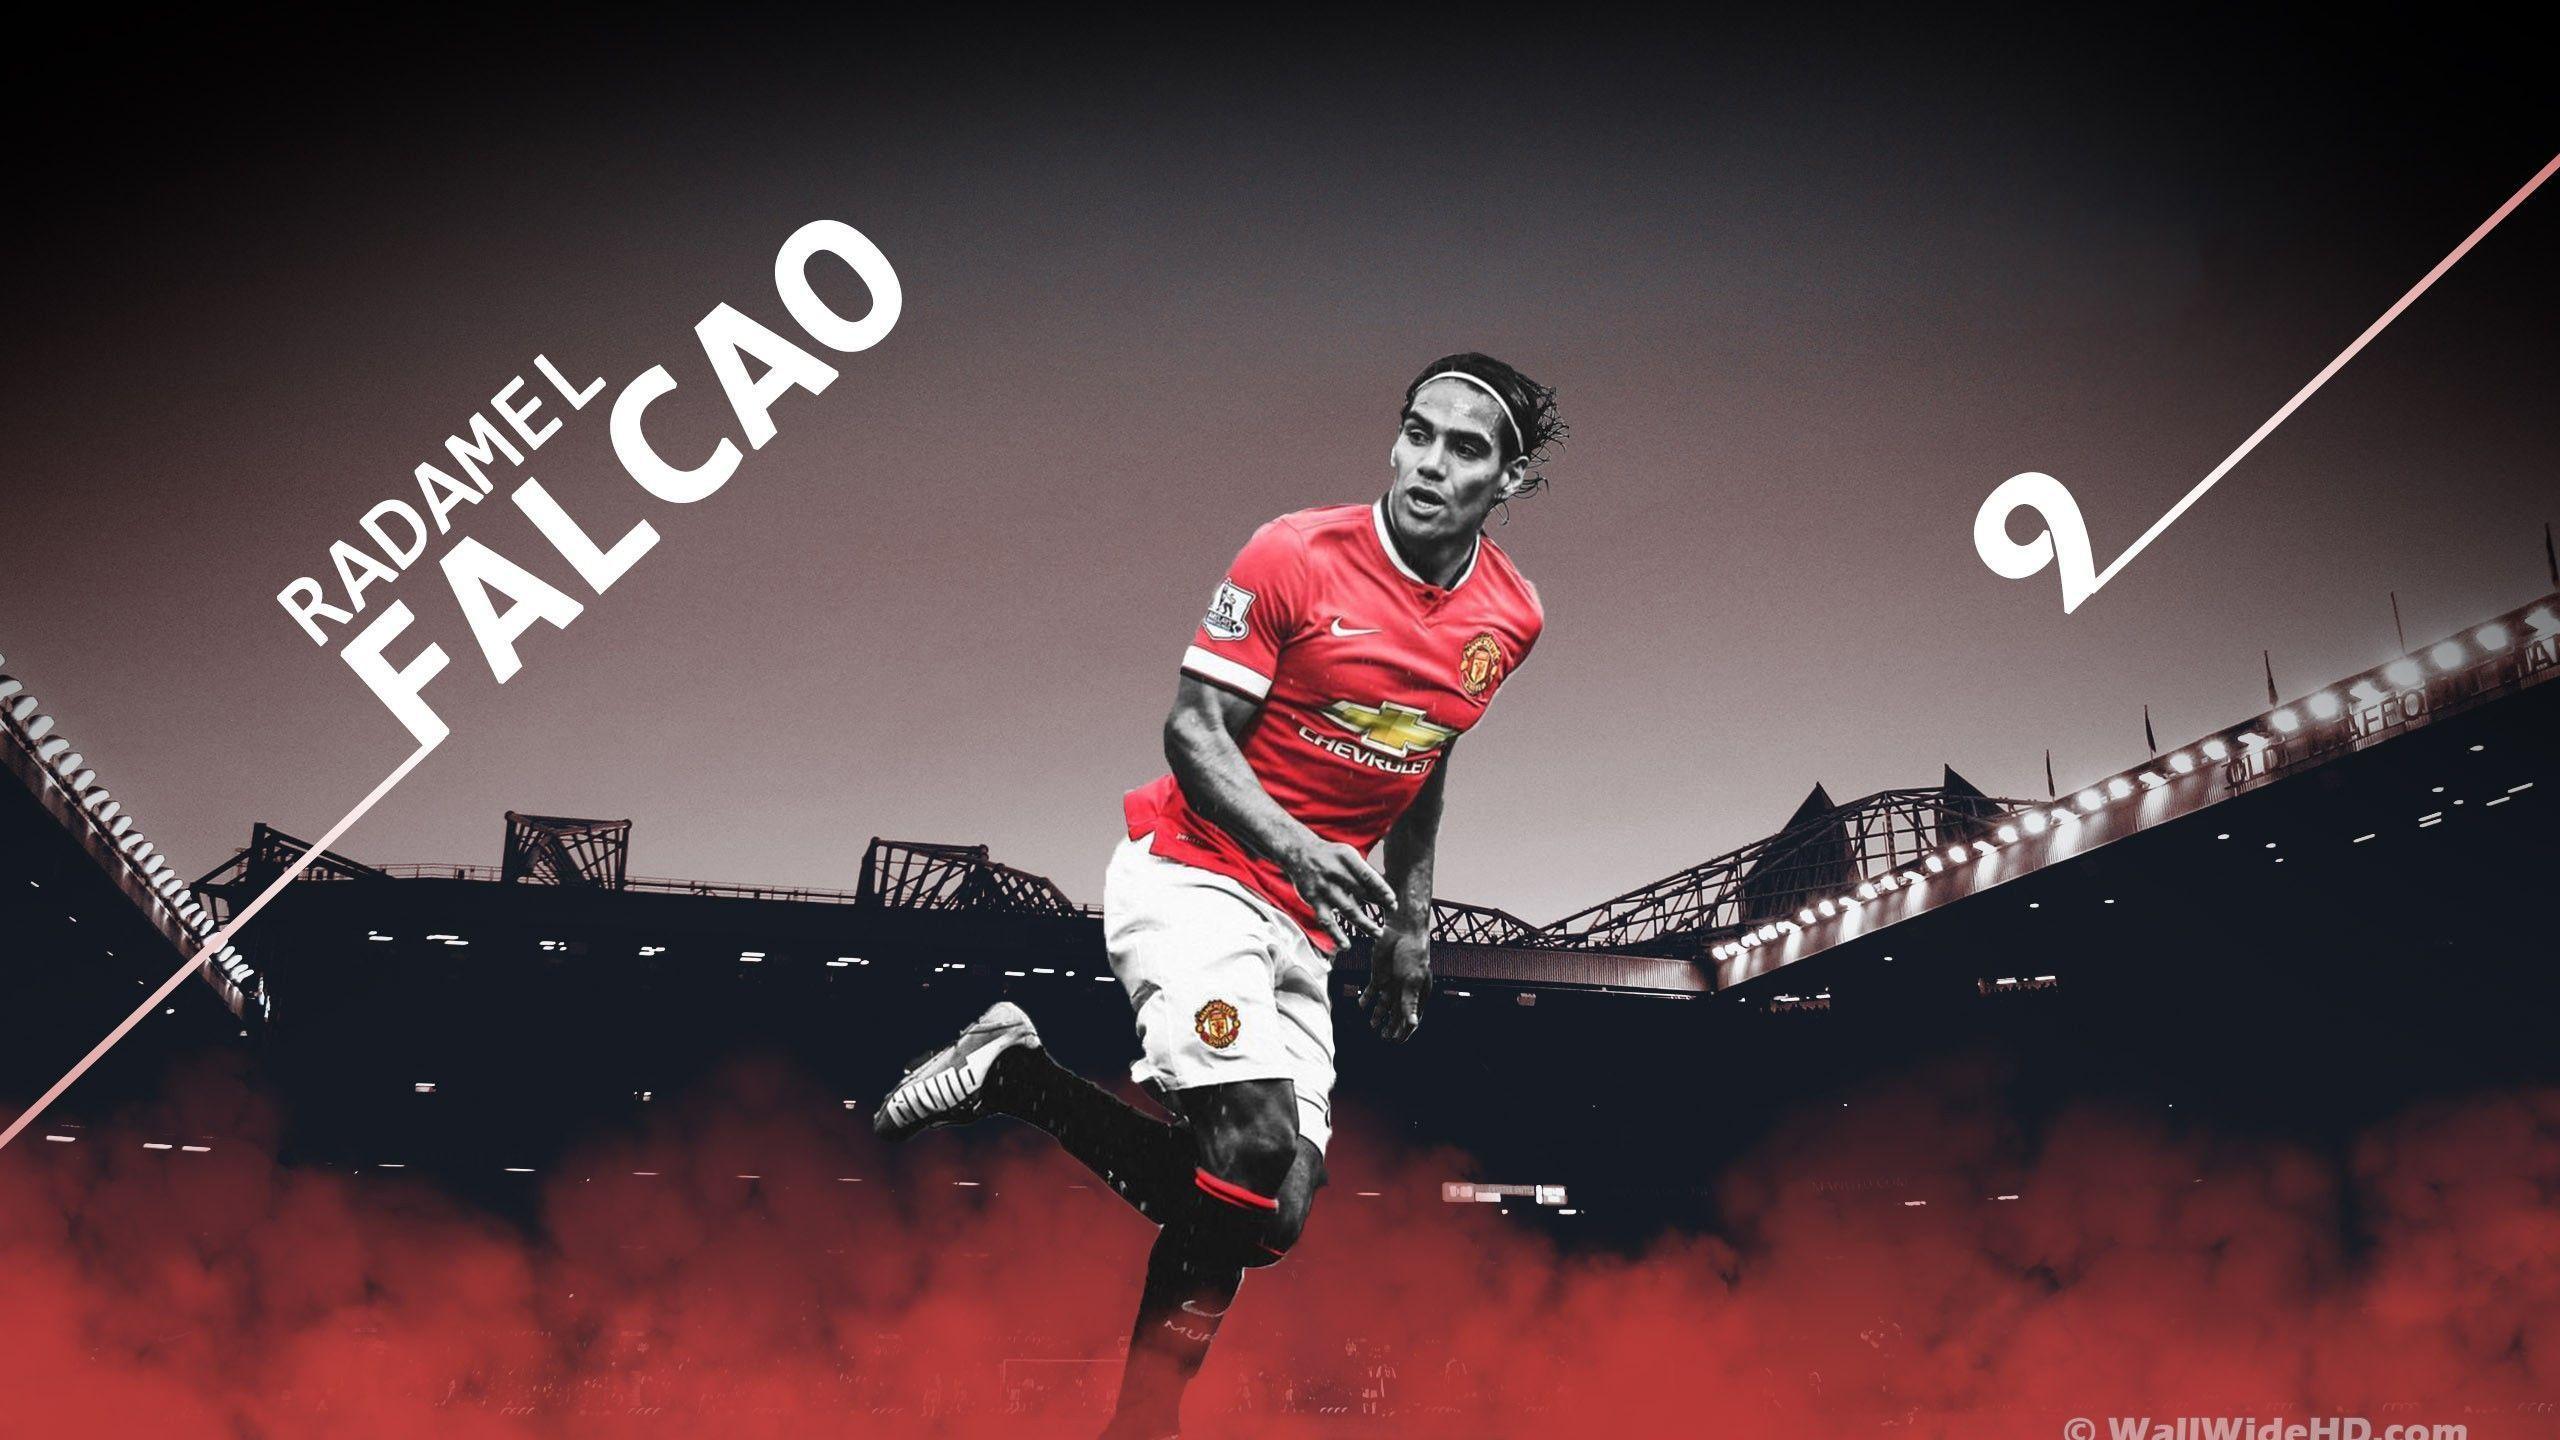 Radamel Falcao 2015 Manchester United Wallpaper Wide or HD. Male